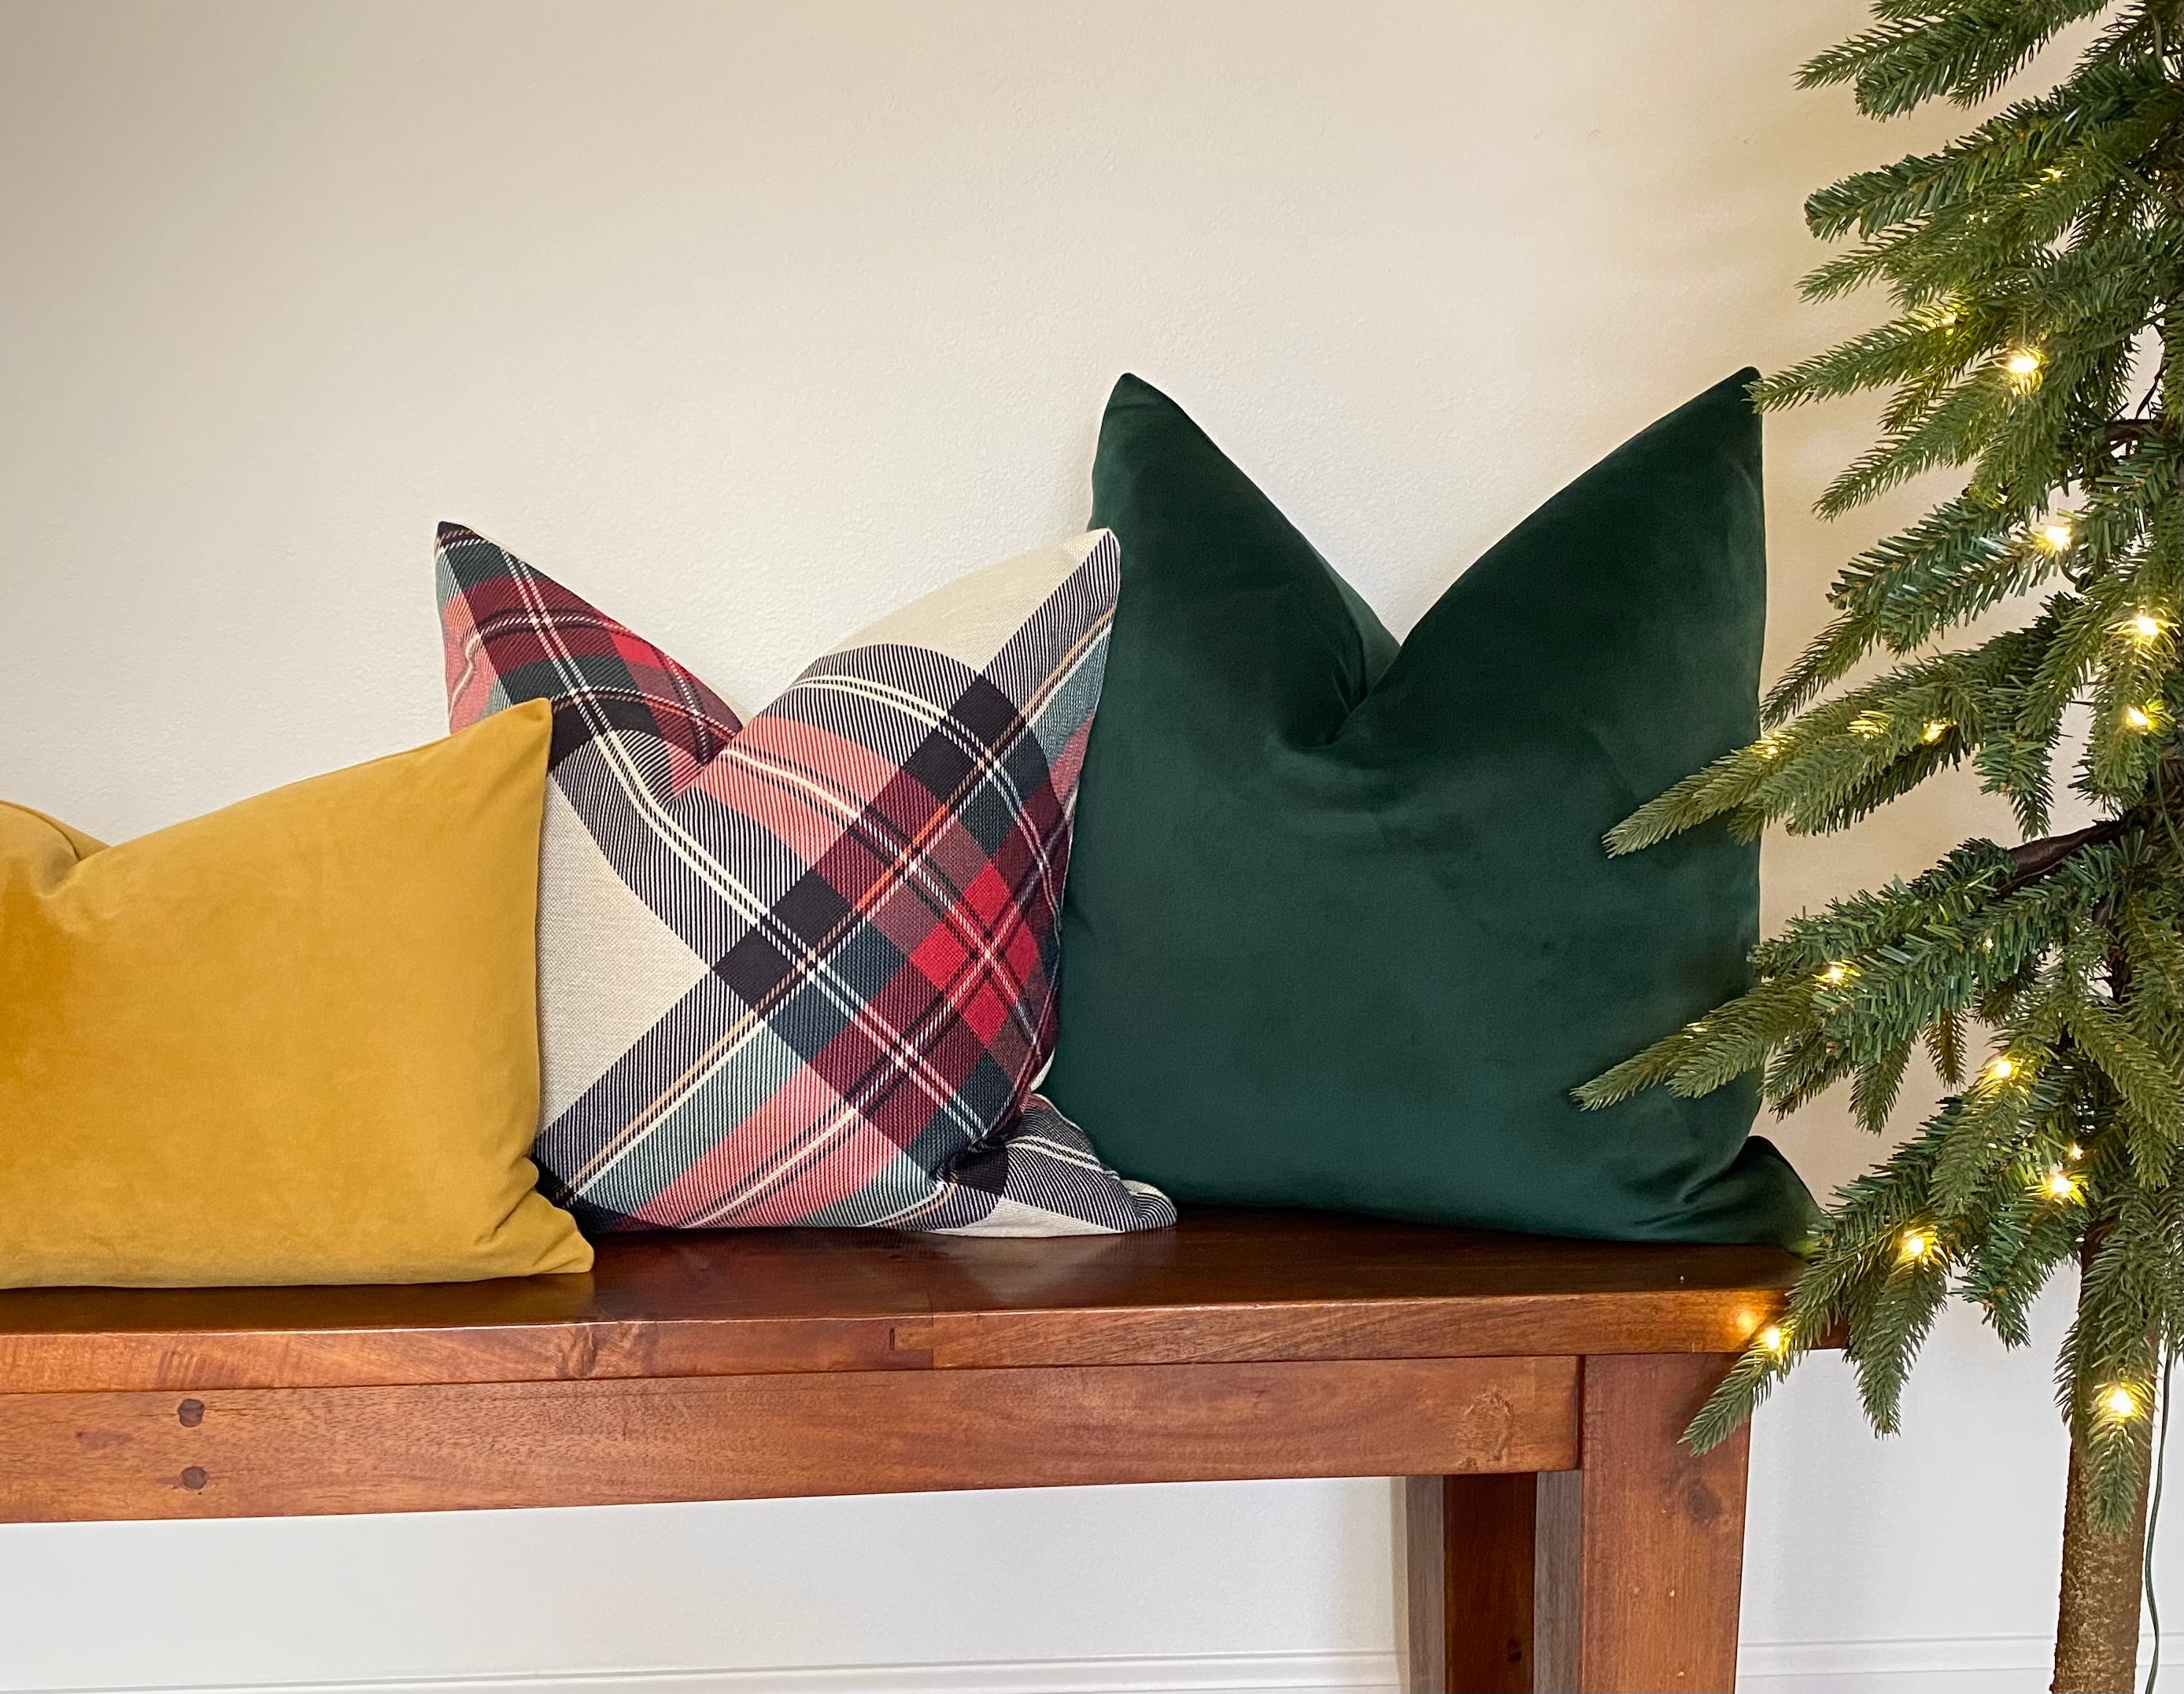 Christmas Pillows, Green Plaid Pillow Cover, Tartan Pillow Covers